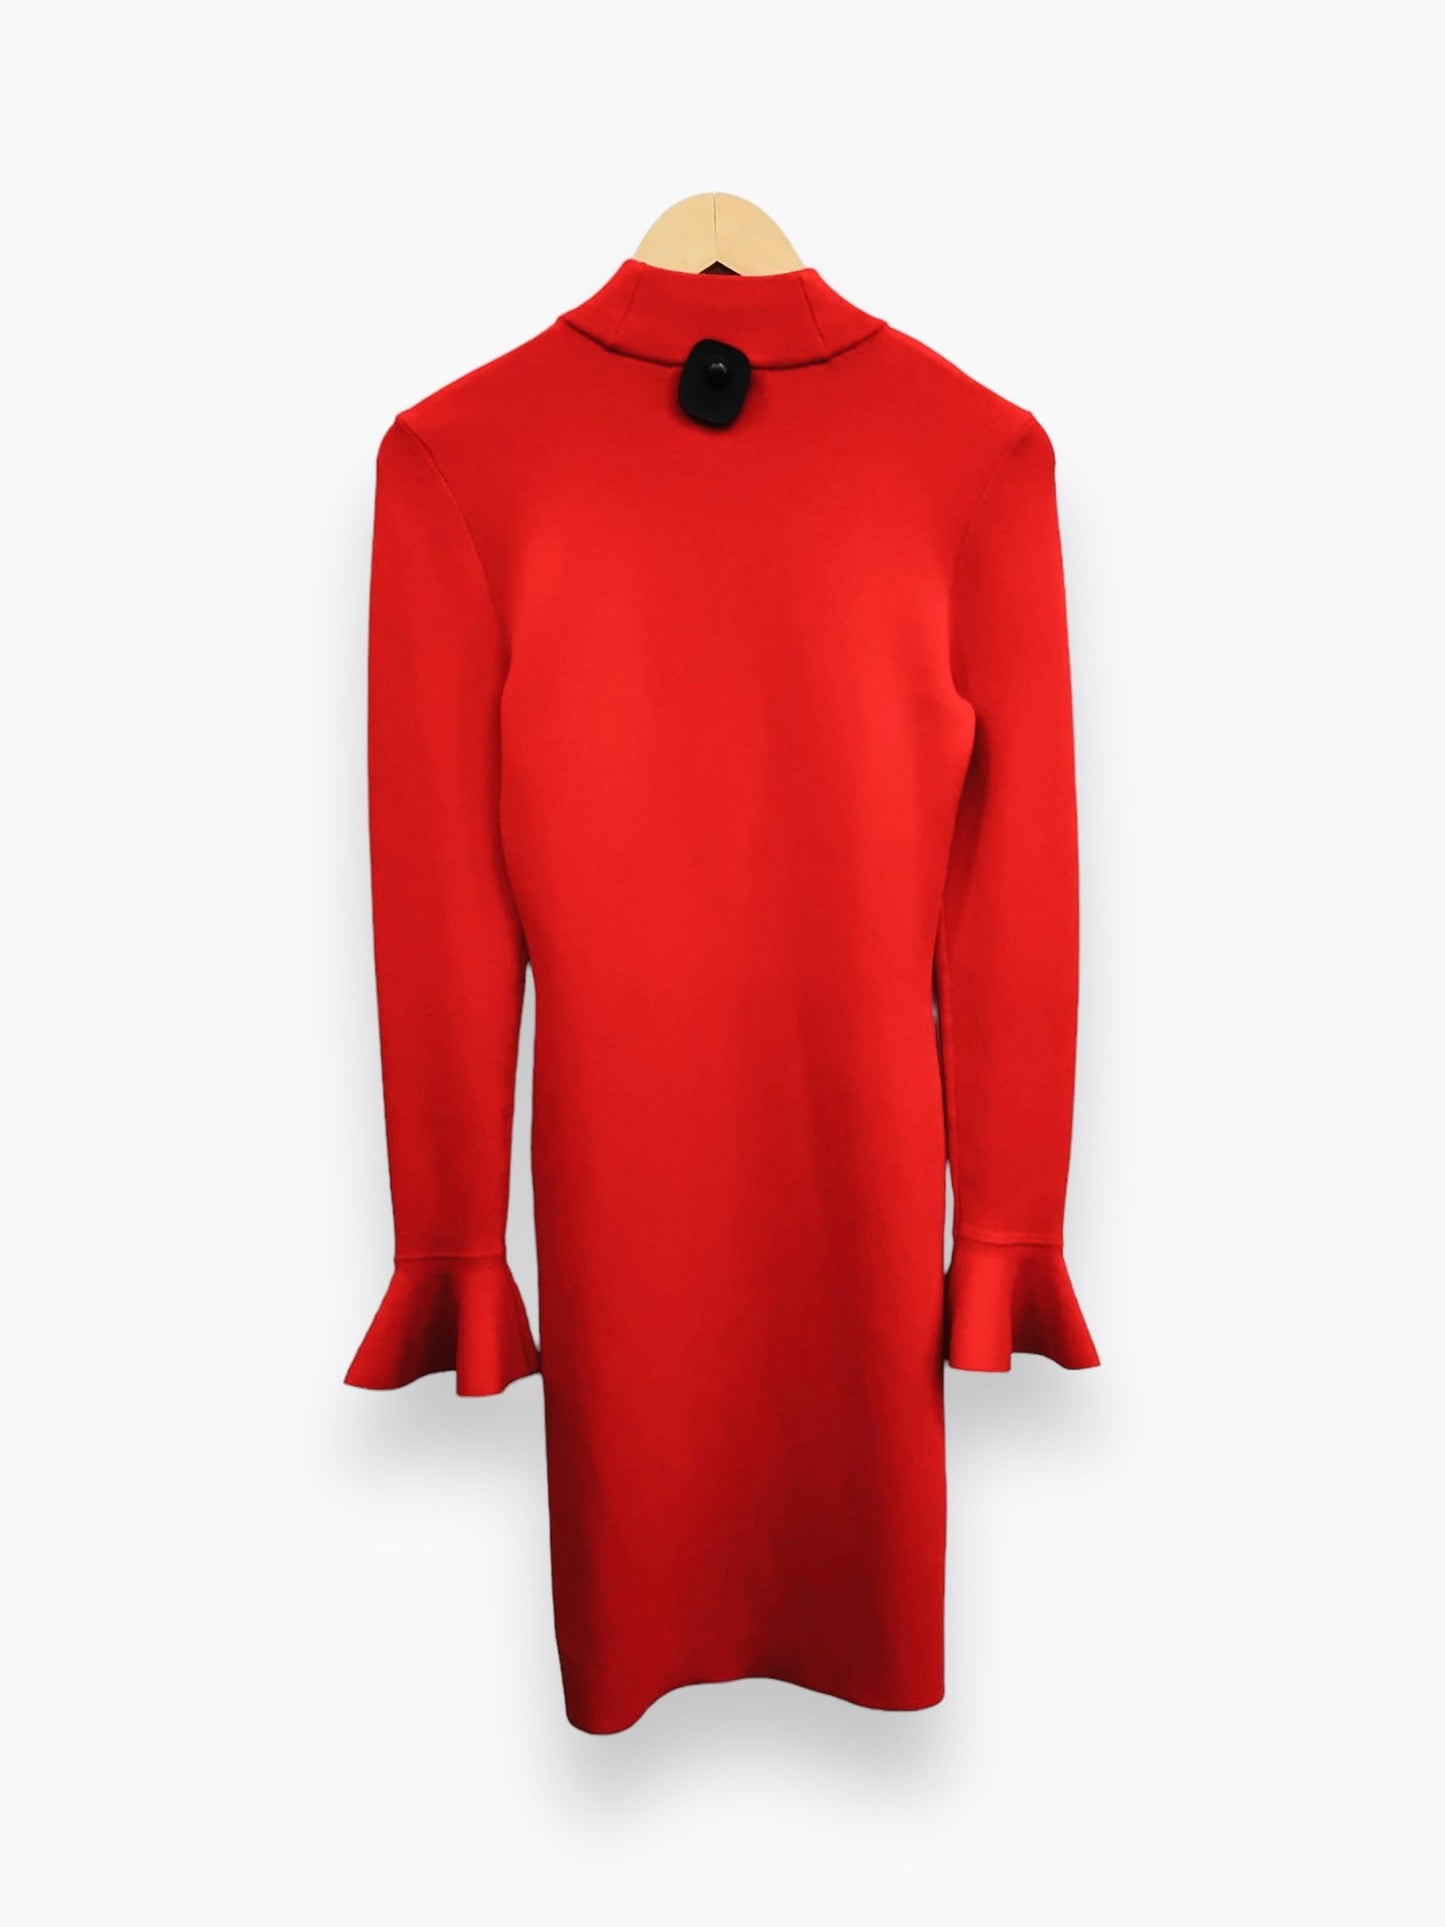 Red Dress Designer Michael Kors, Size S